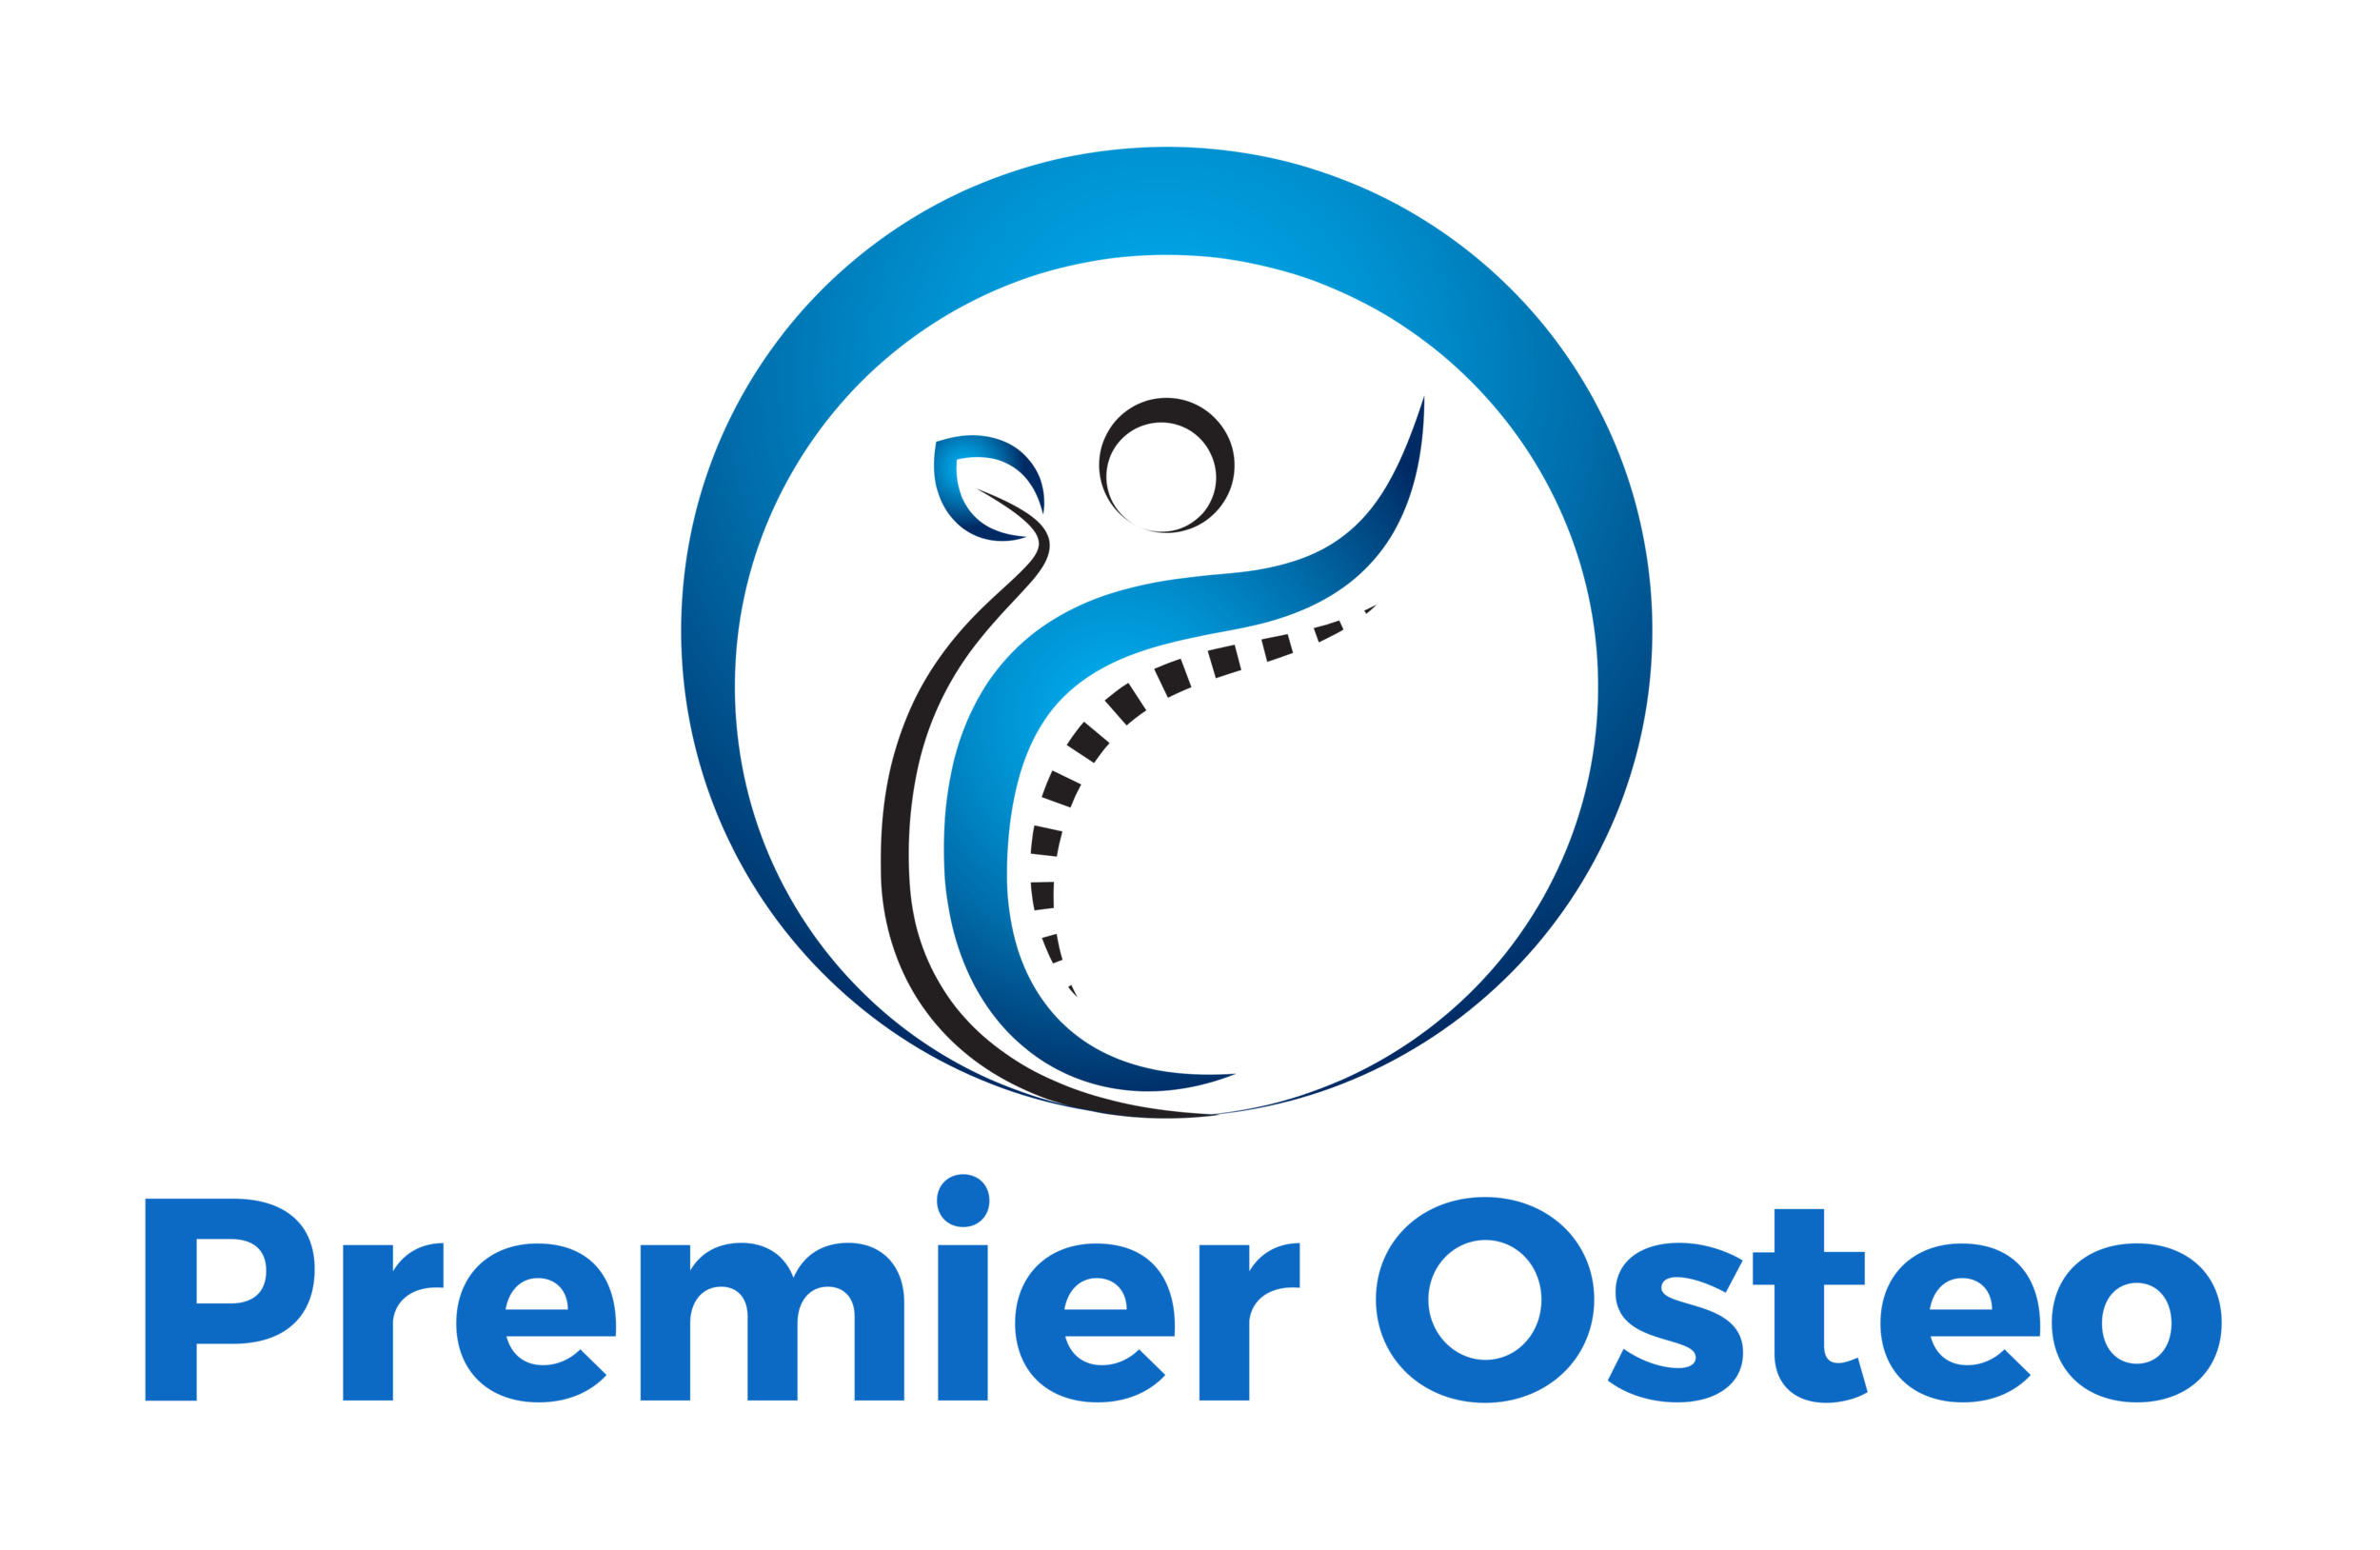 Premier Osteopaths